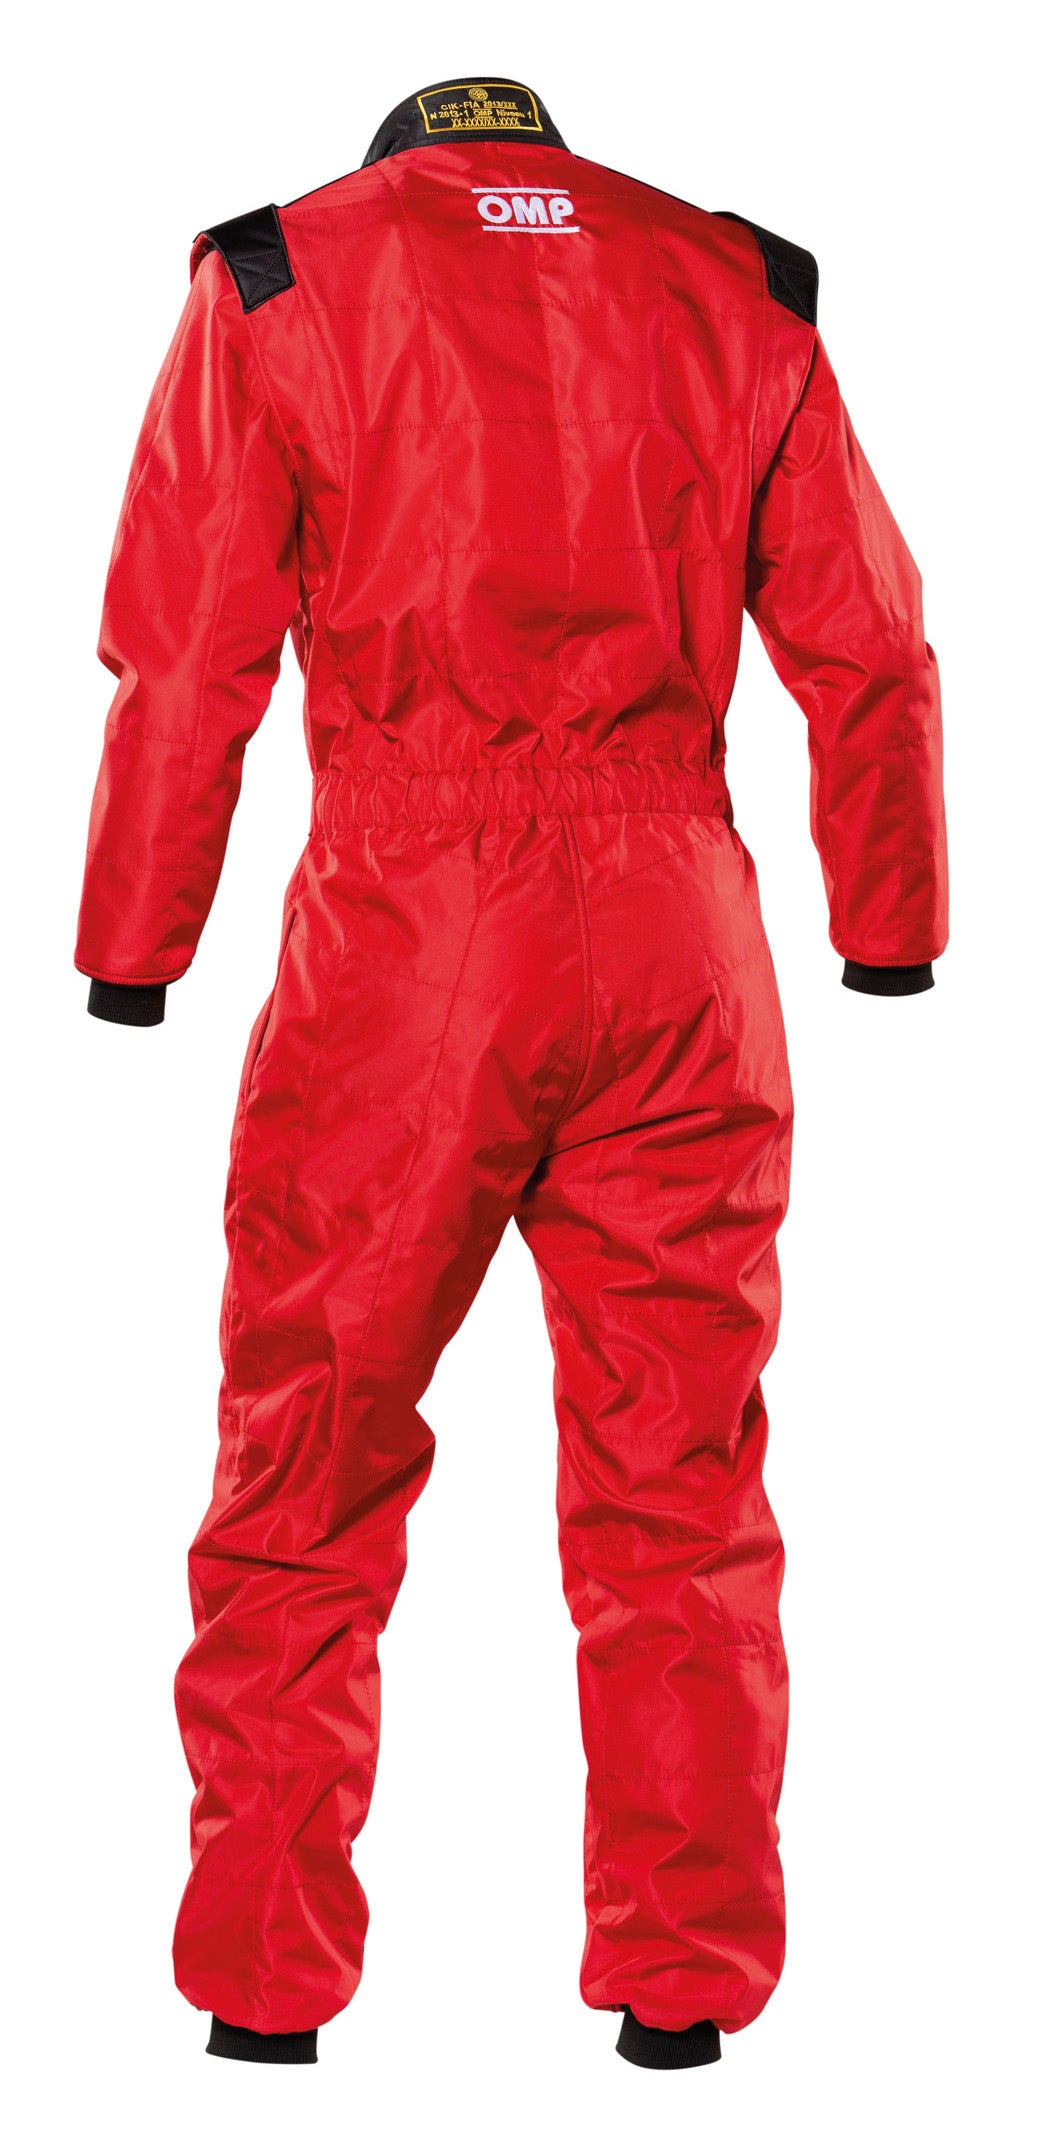 OMP KA0-1728-A01-061-XXL (KK01728061XXL) Karting suit KS-4 Suit my2021, CIK LEVEL 1, red, size XXL Photo-1 